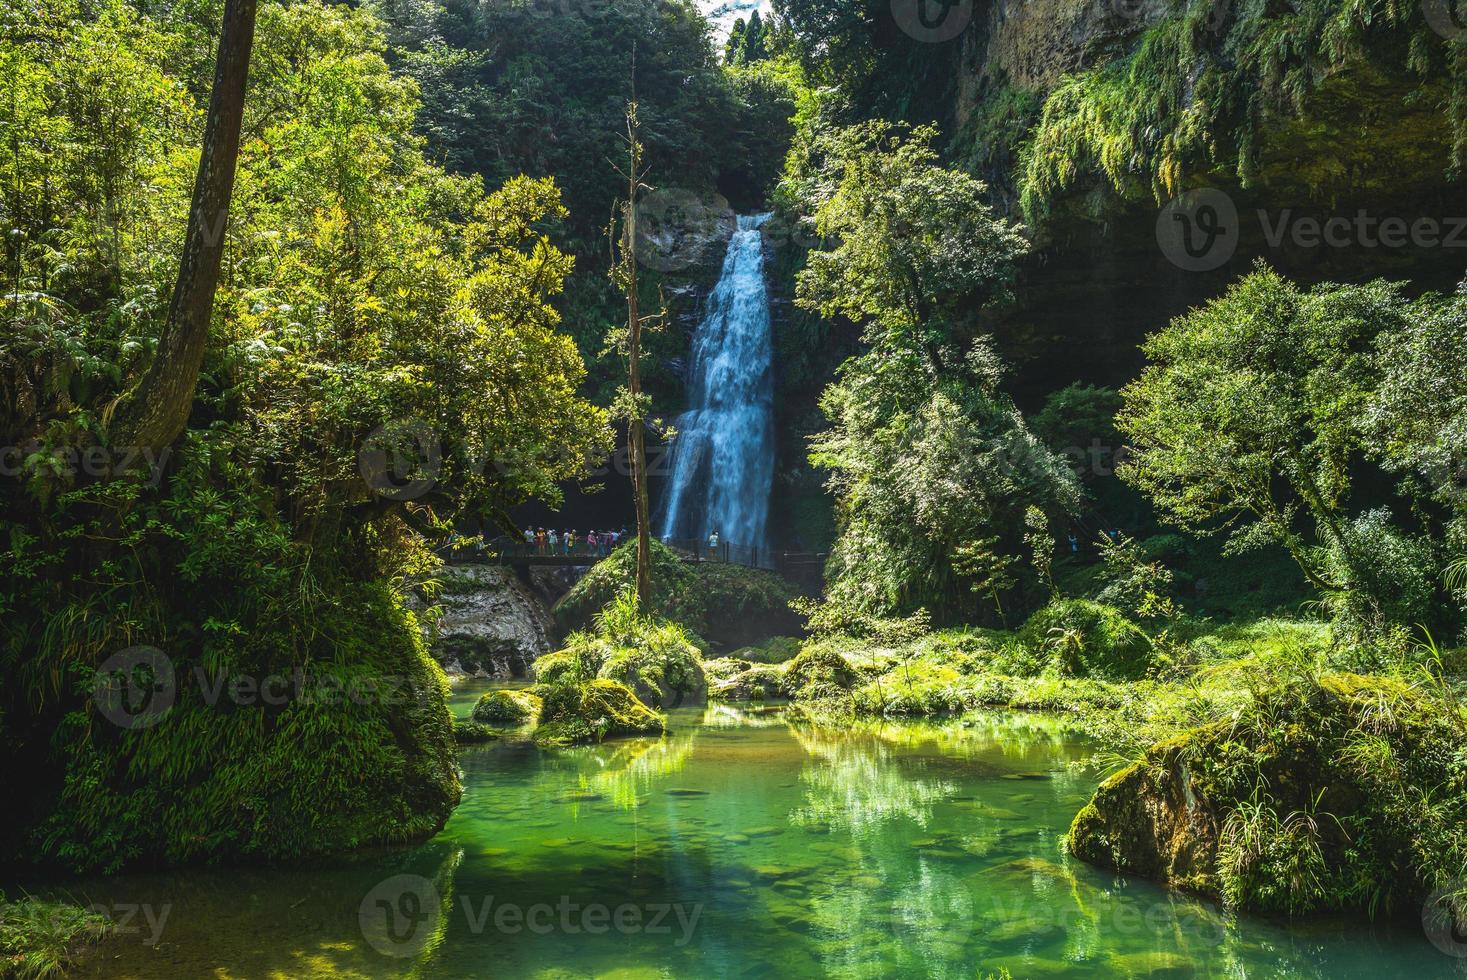 cachoeira sunglungyen em shanlinshi, taiwan foto